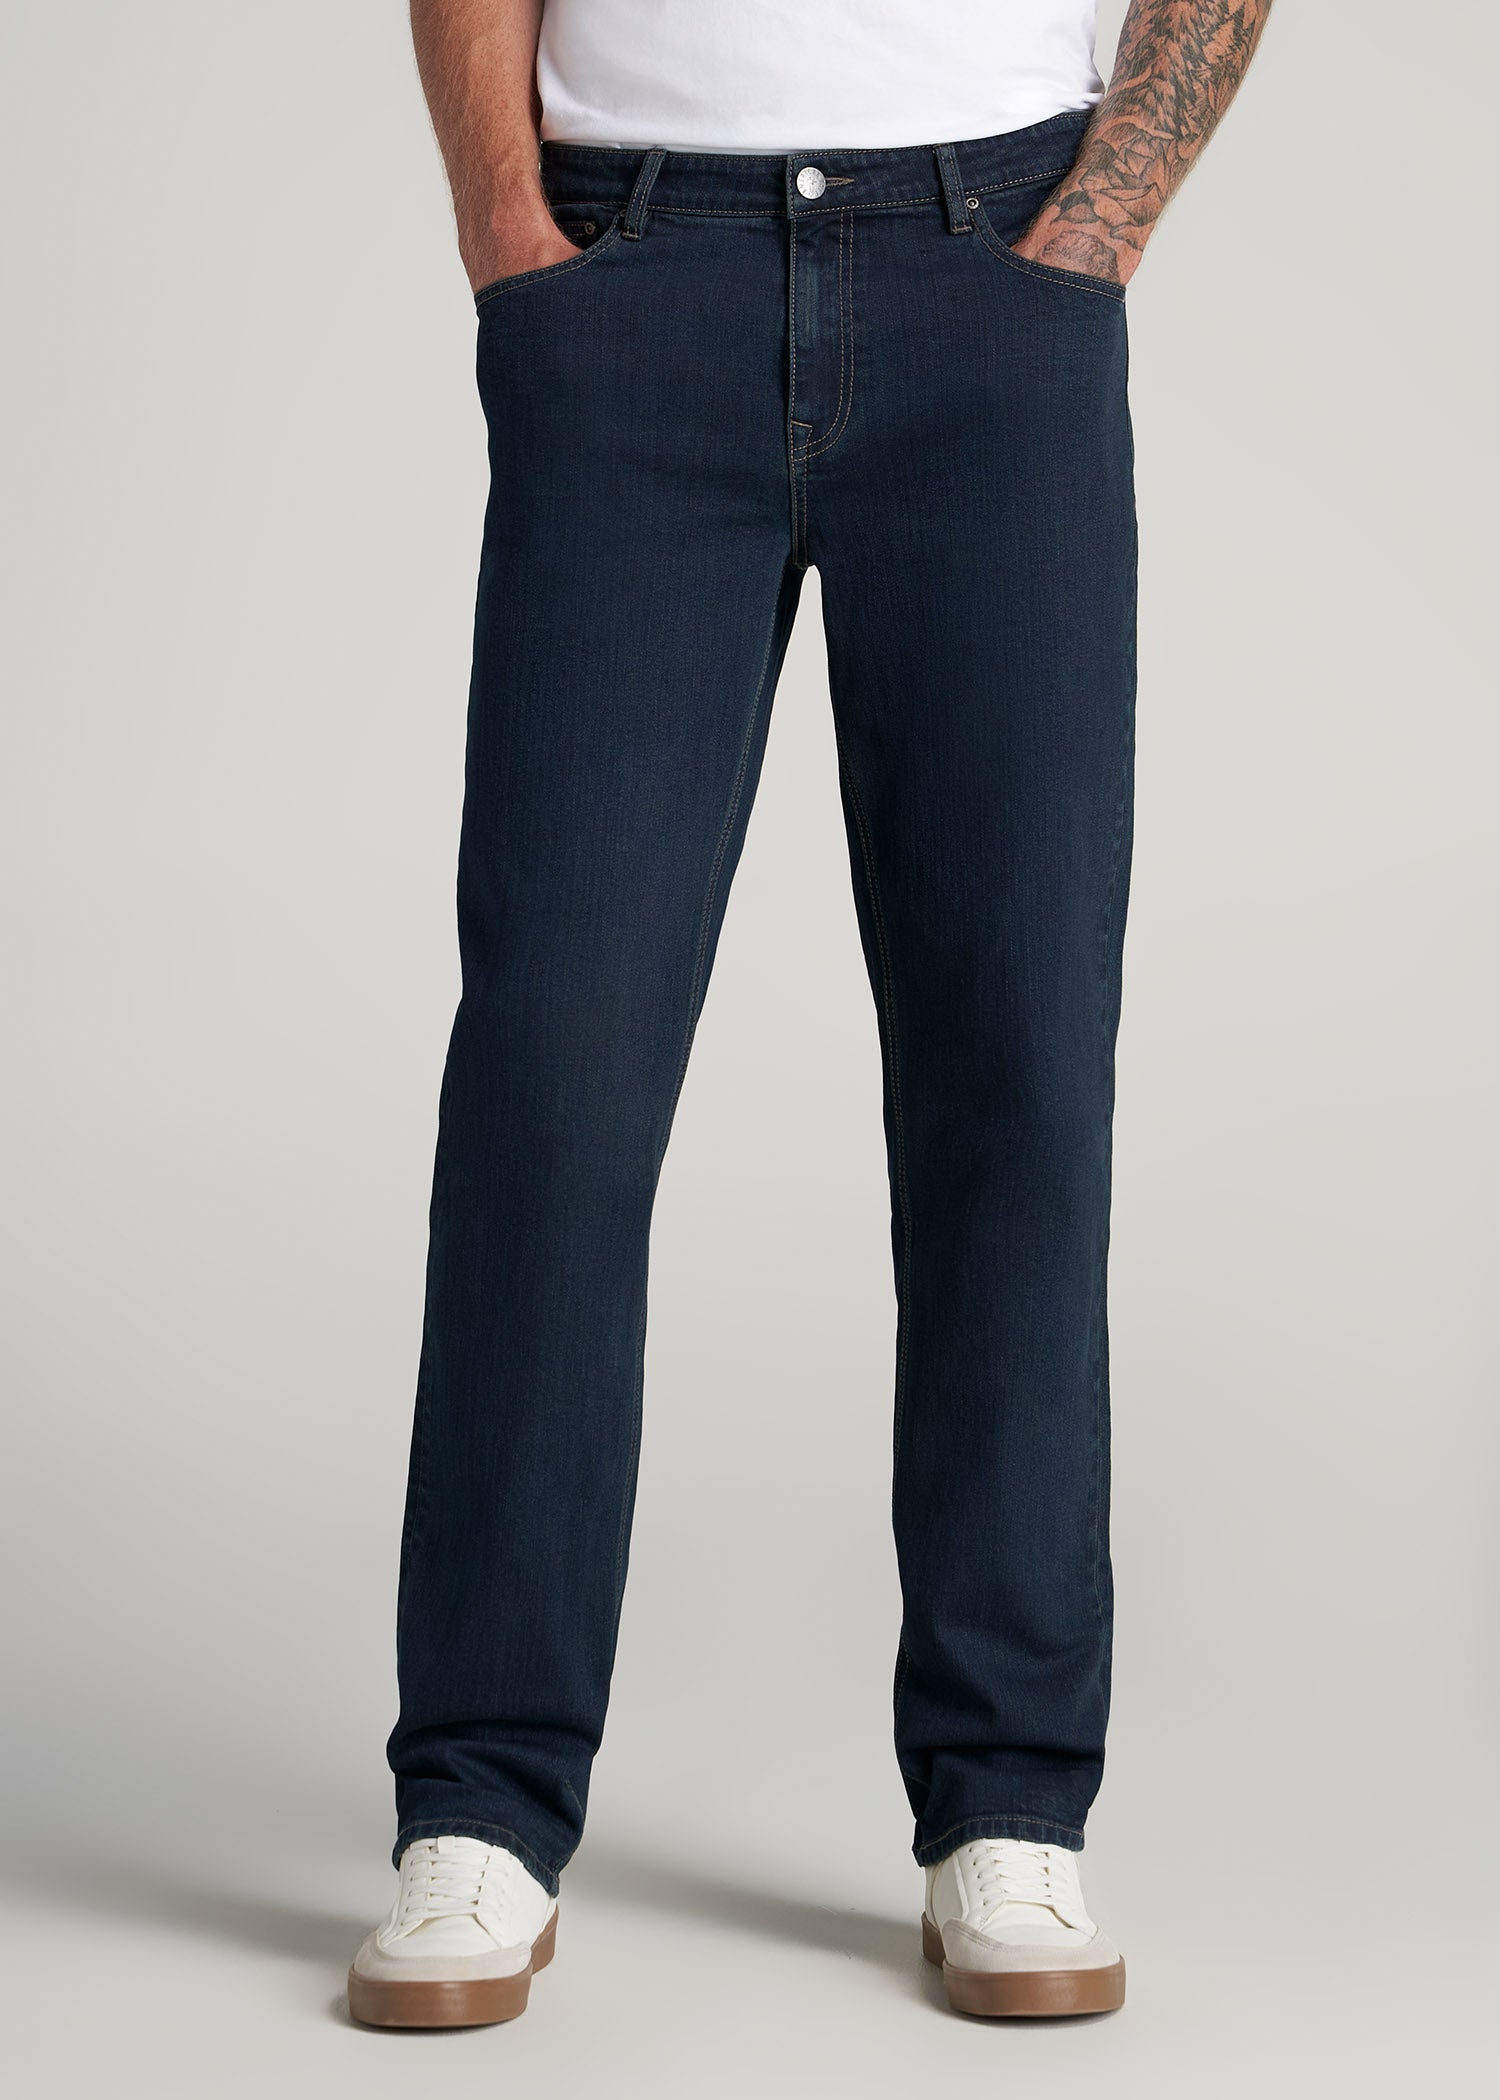       American-Tall-Men-J1-Jeans-Deep-Blue-Rinse-front